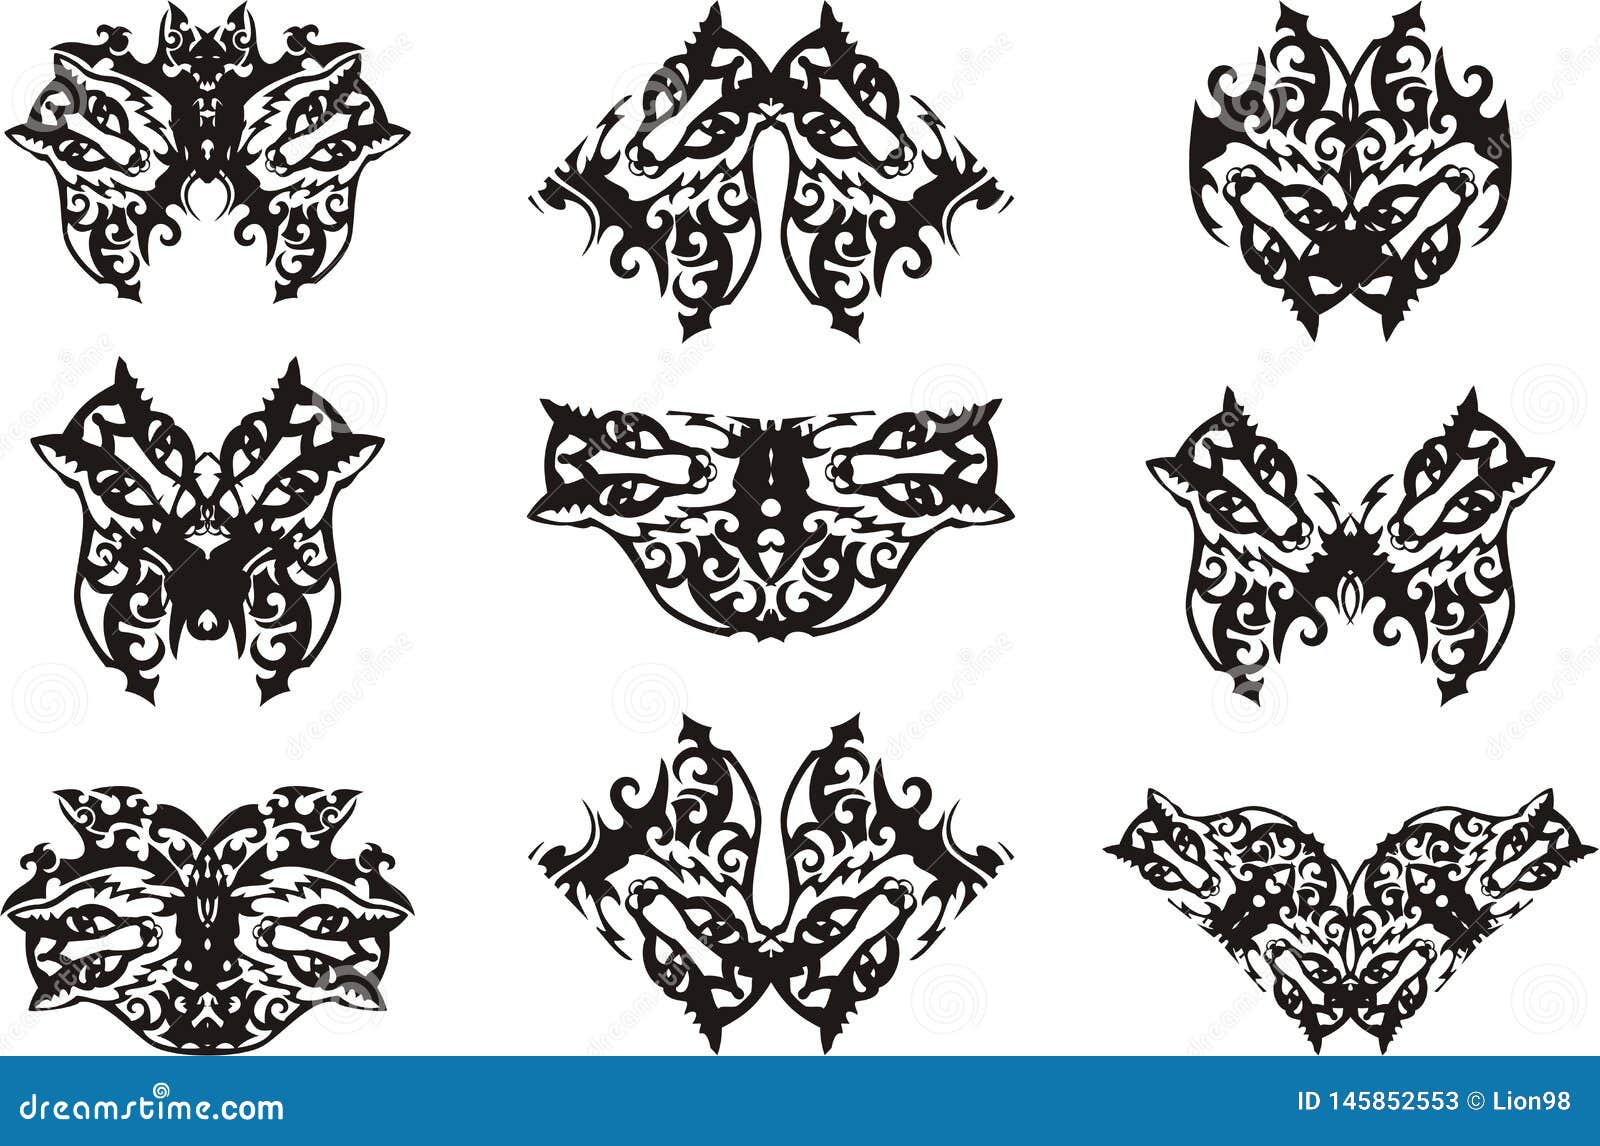 Stylized Fox Heads in the Butterflies Form Illustration Stock ...